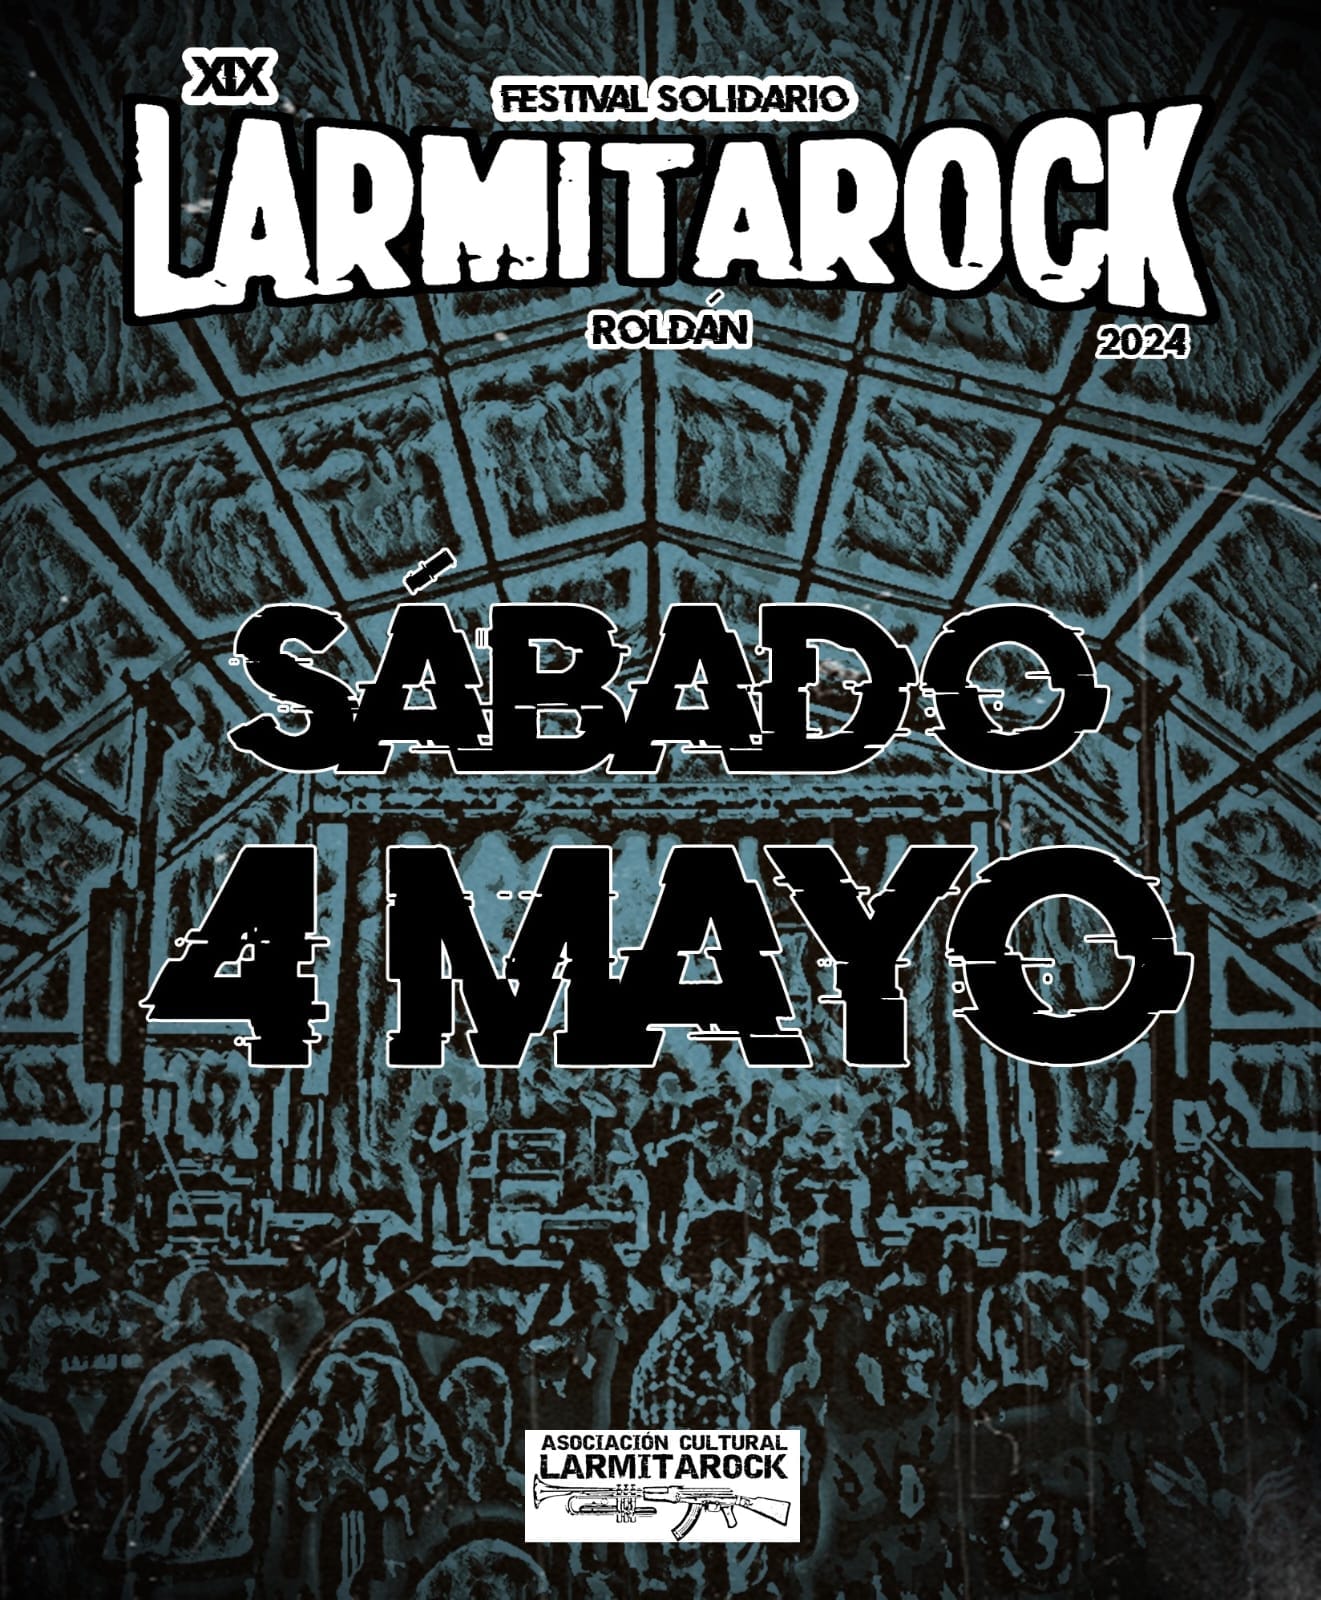 larmitarock-festival-solidario-roldan.jpg